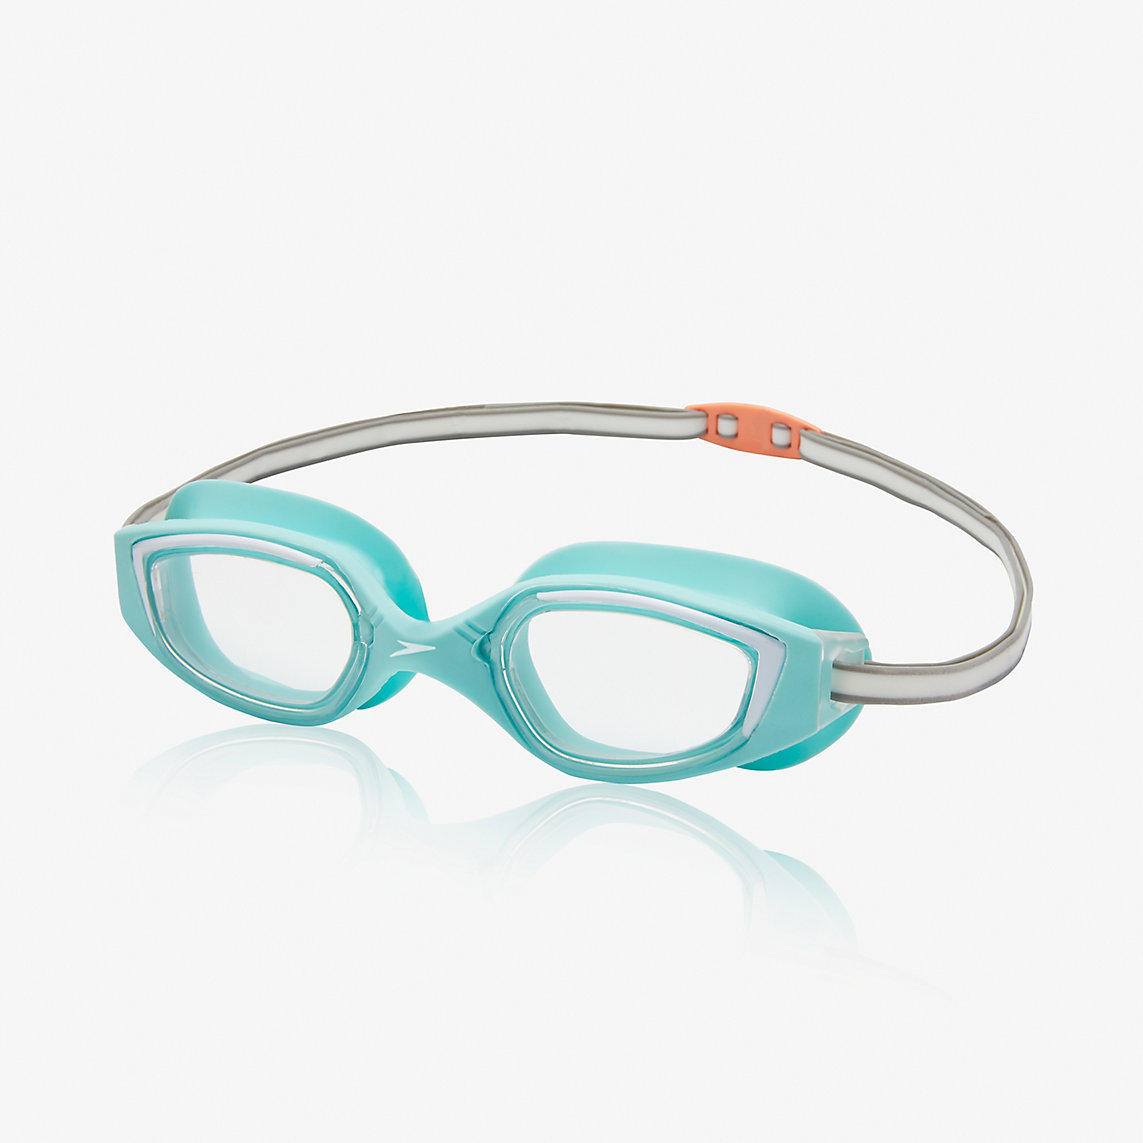 Speedo Women's Hydro Comfort Goggles